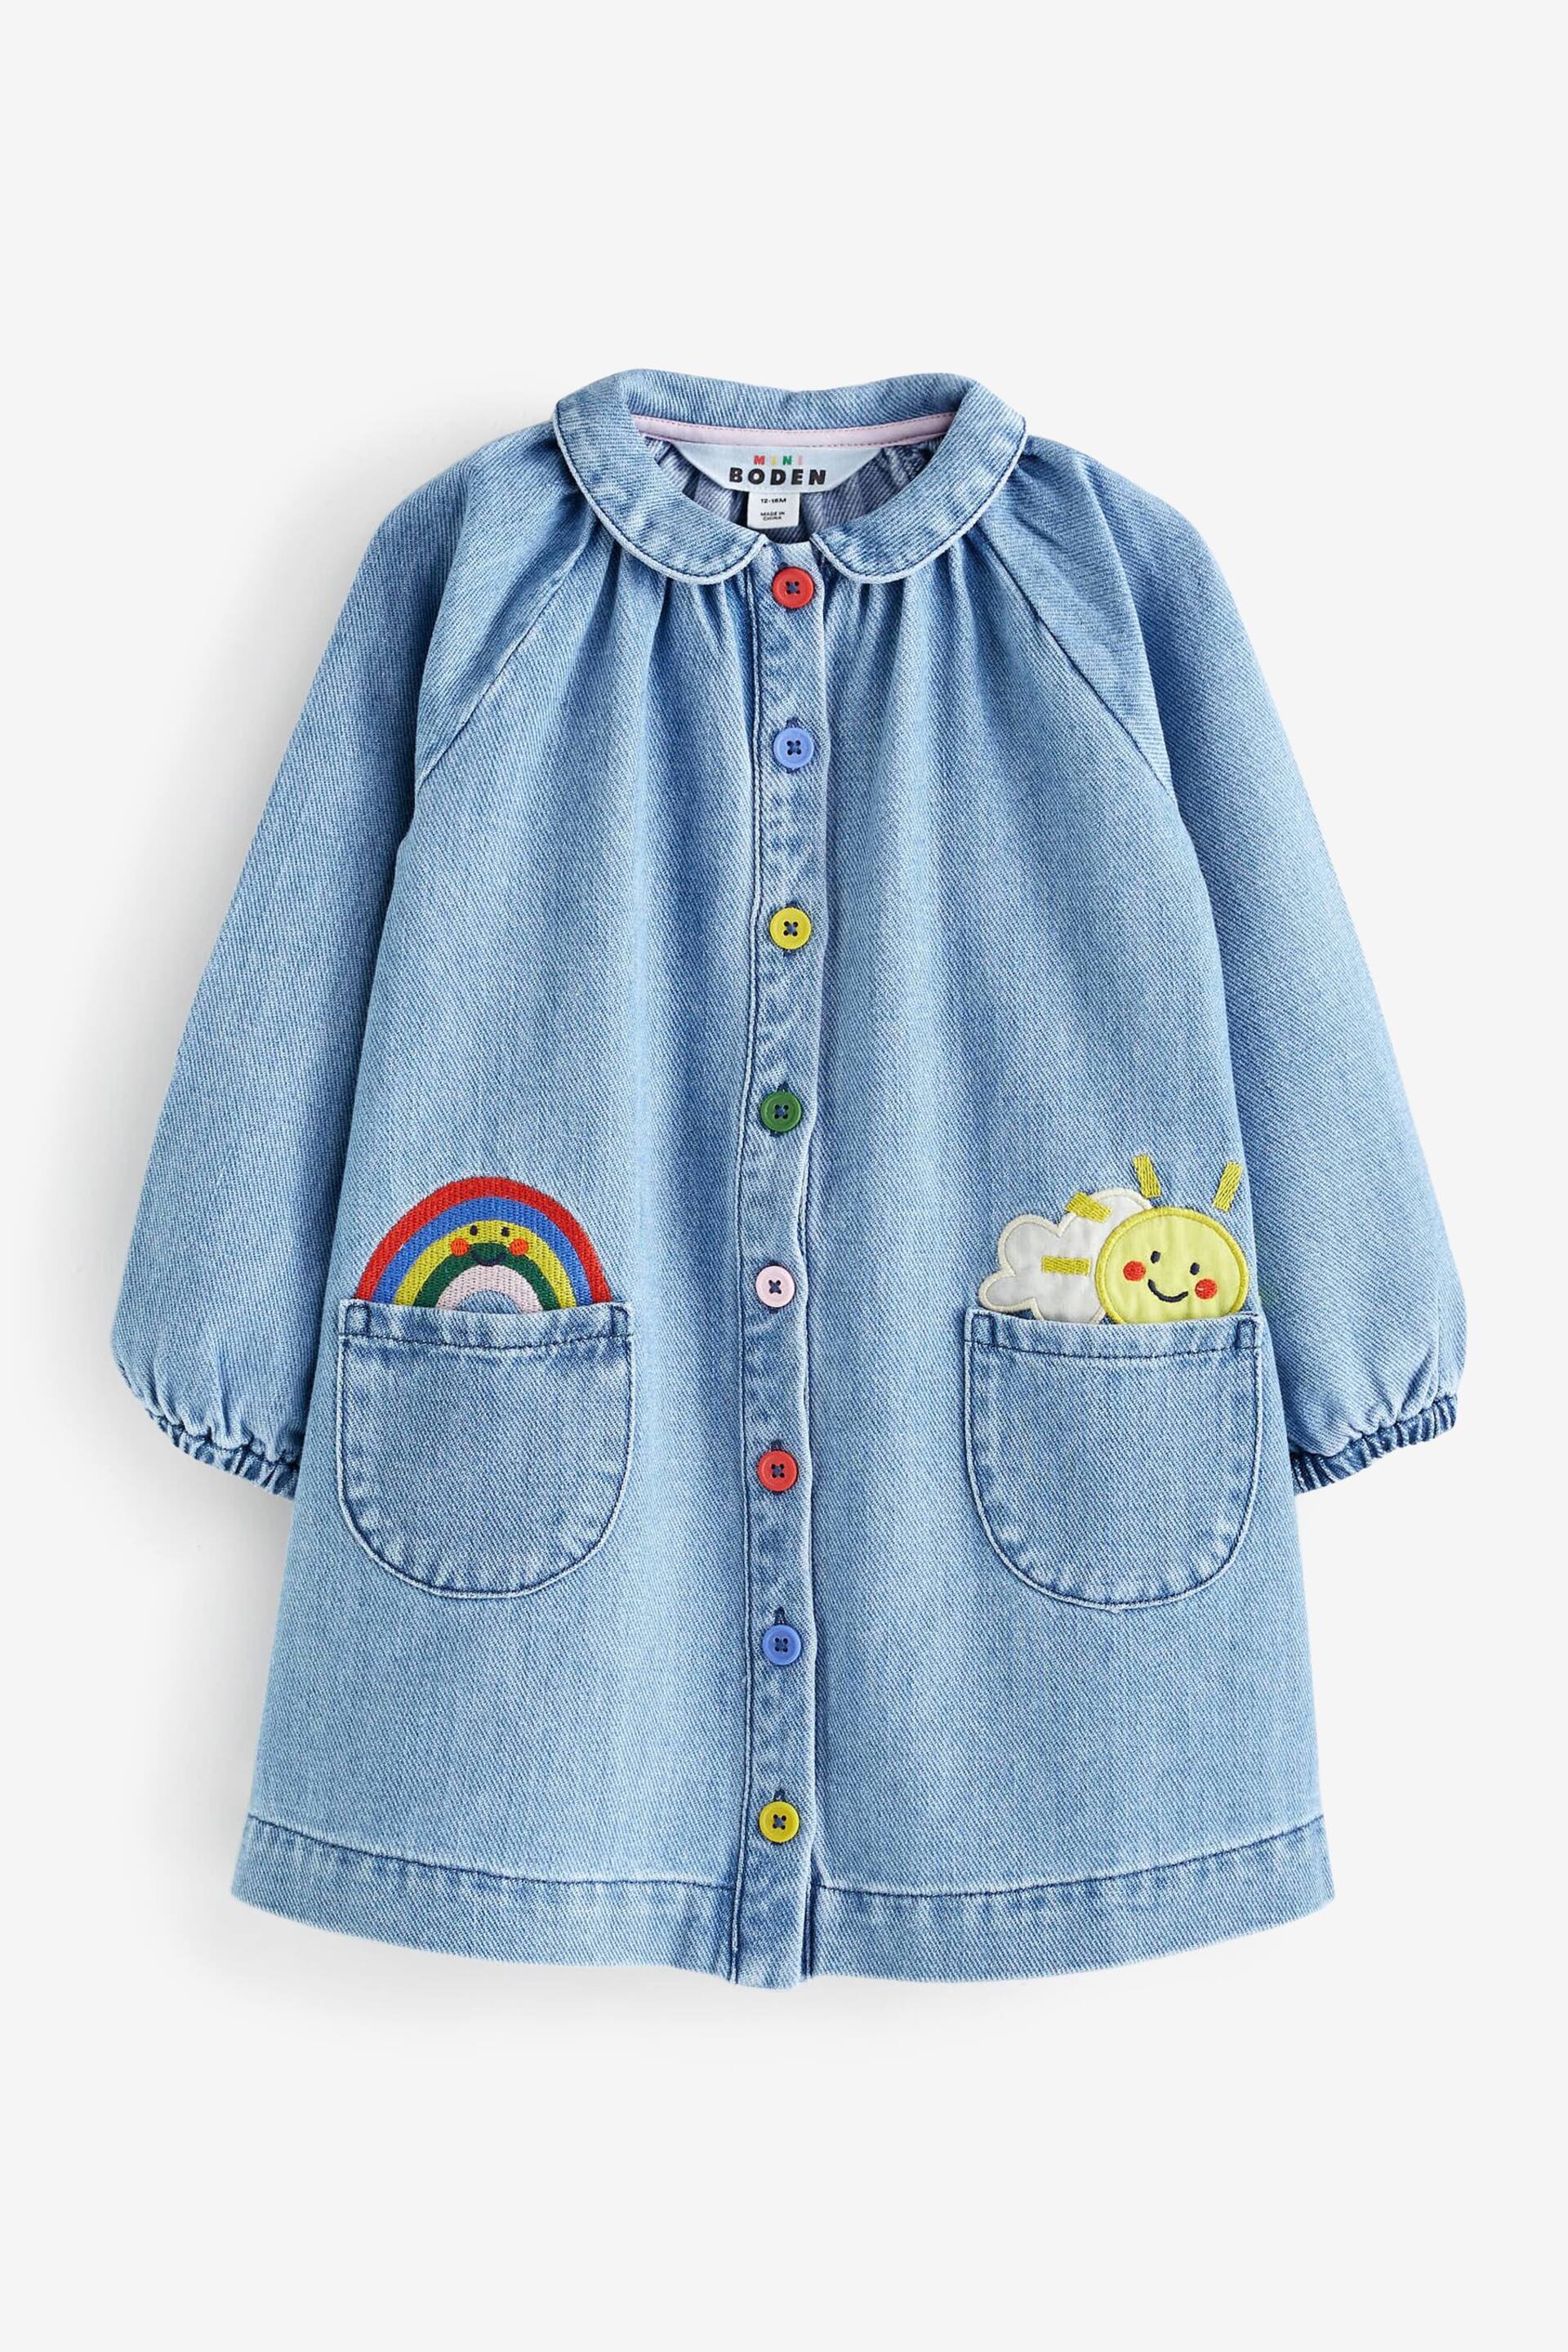 Boden Blue Appliqué Rainbow Weather Shirt Dress - Image 1 of 4